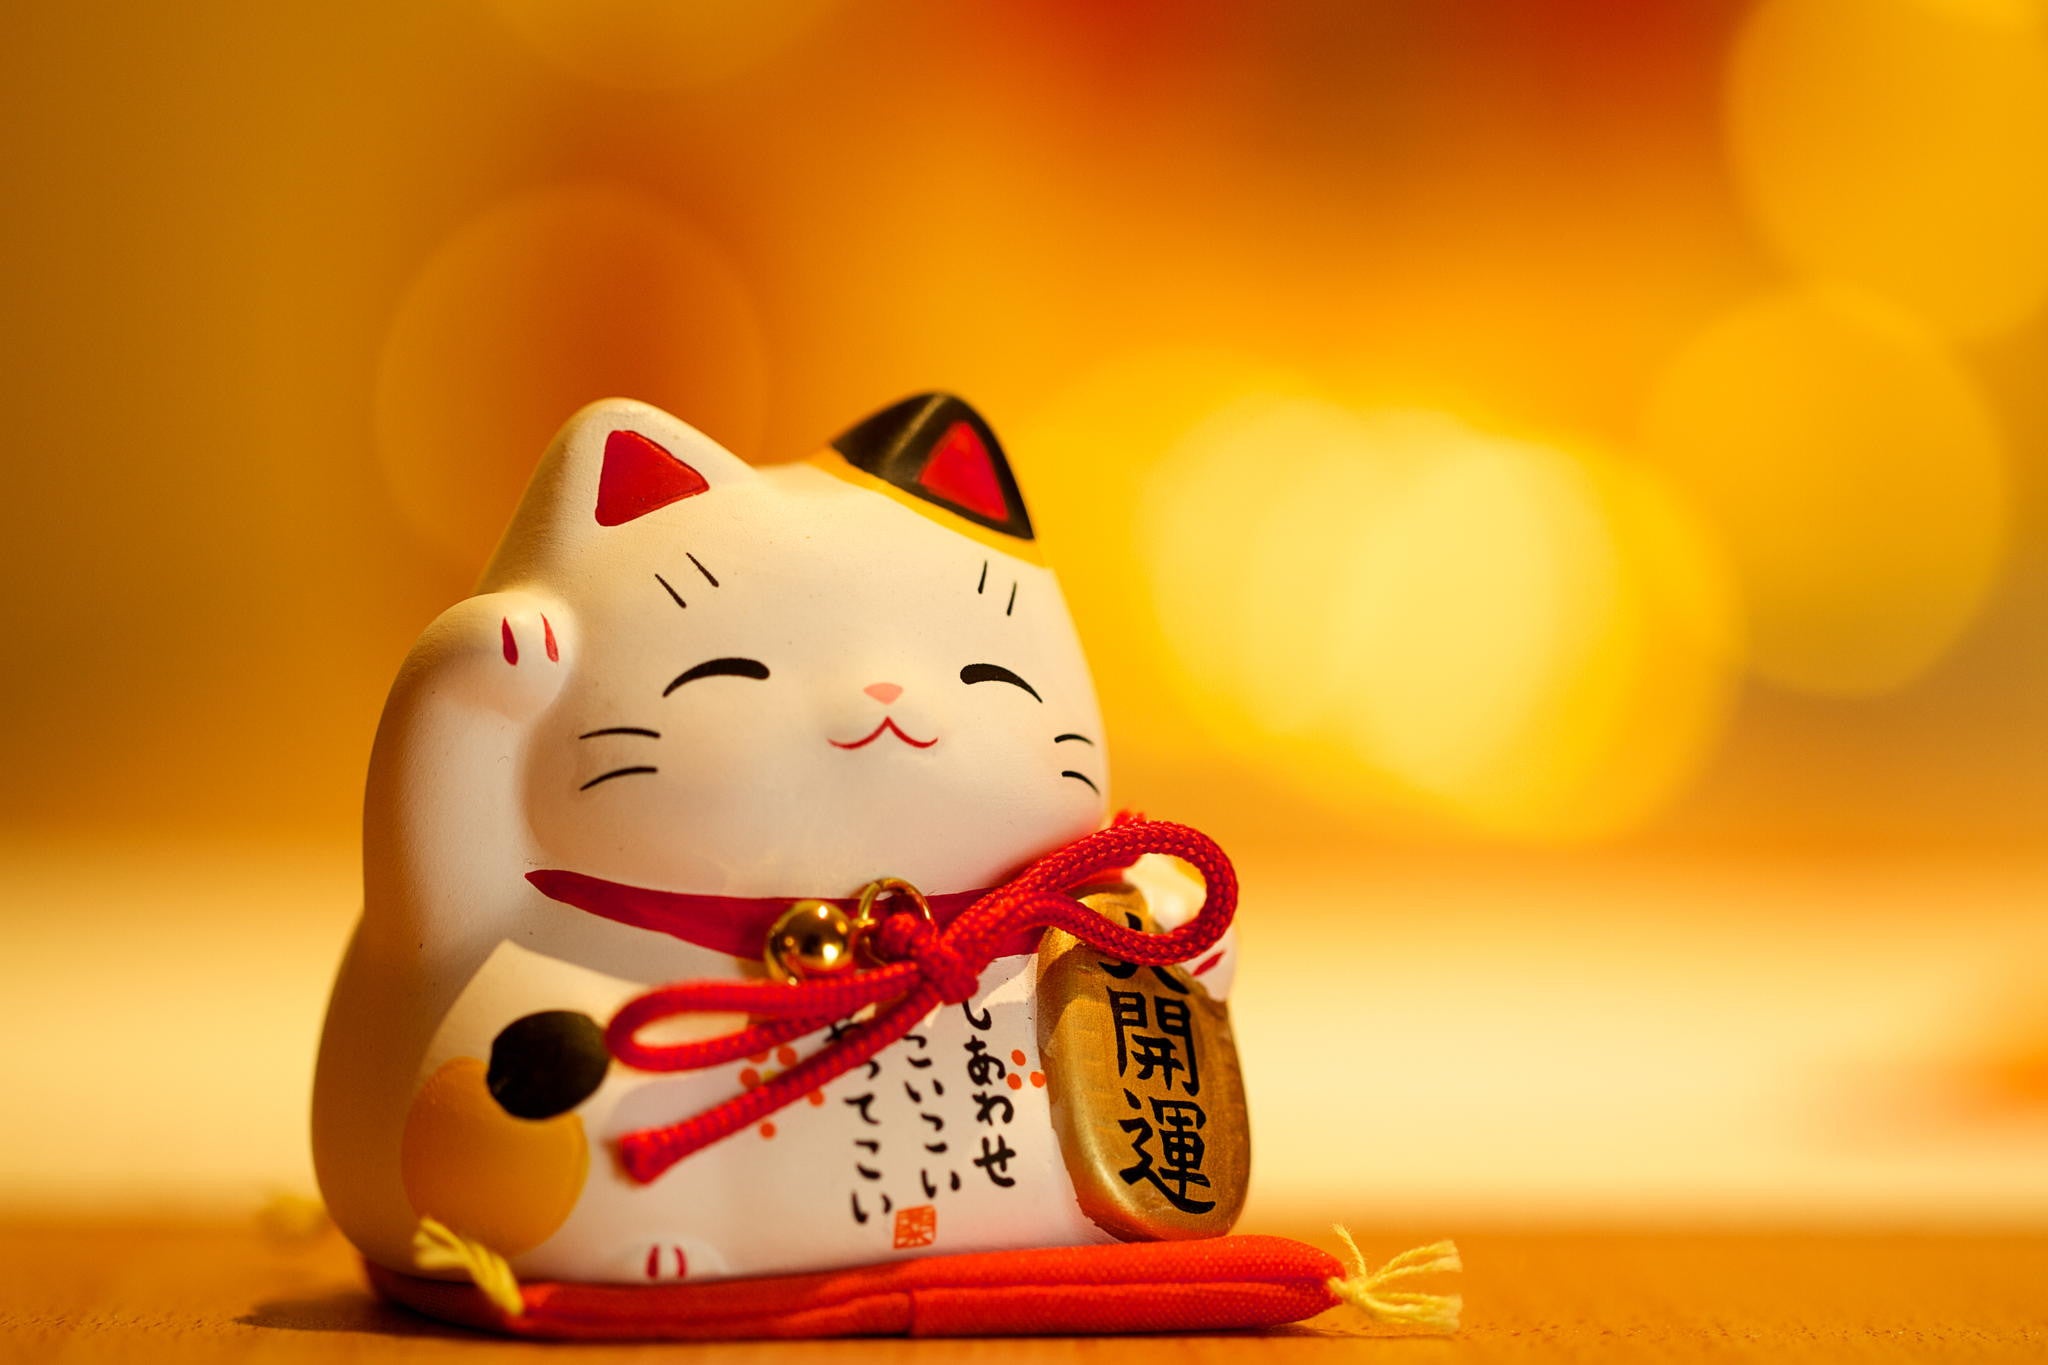 maneki neko good luck cat calico cat figurine